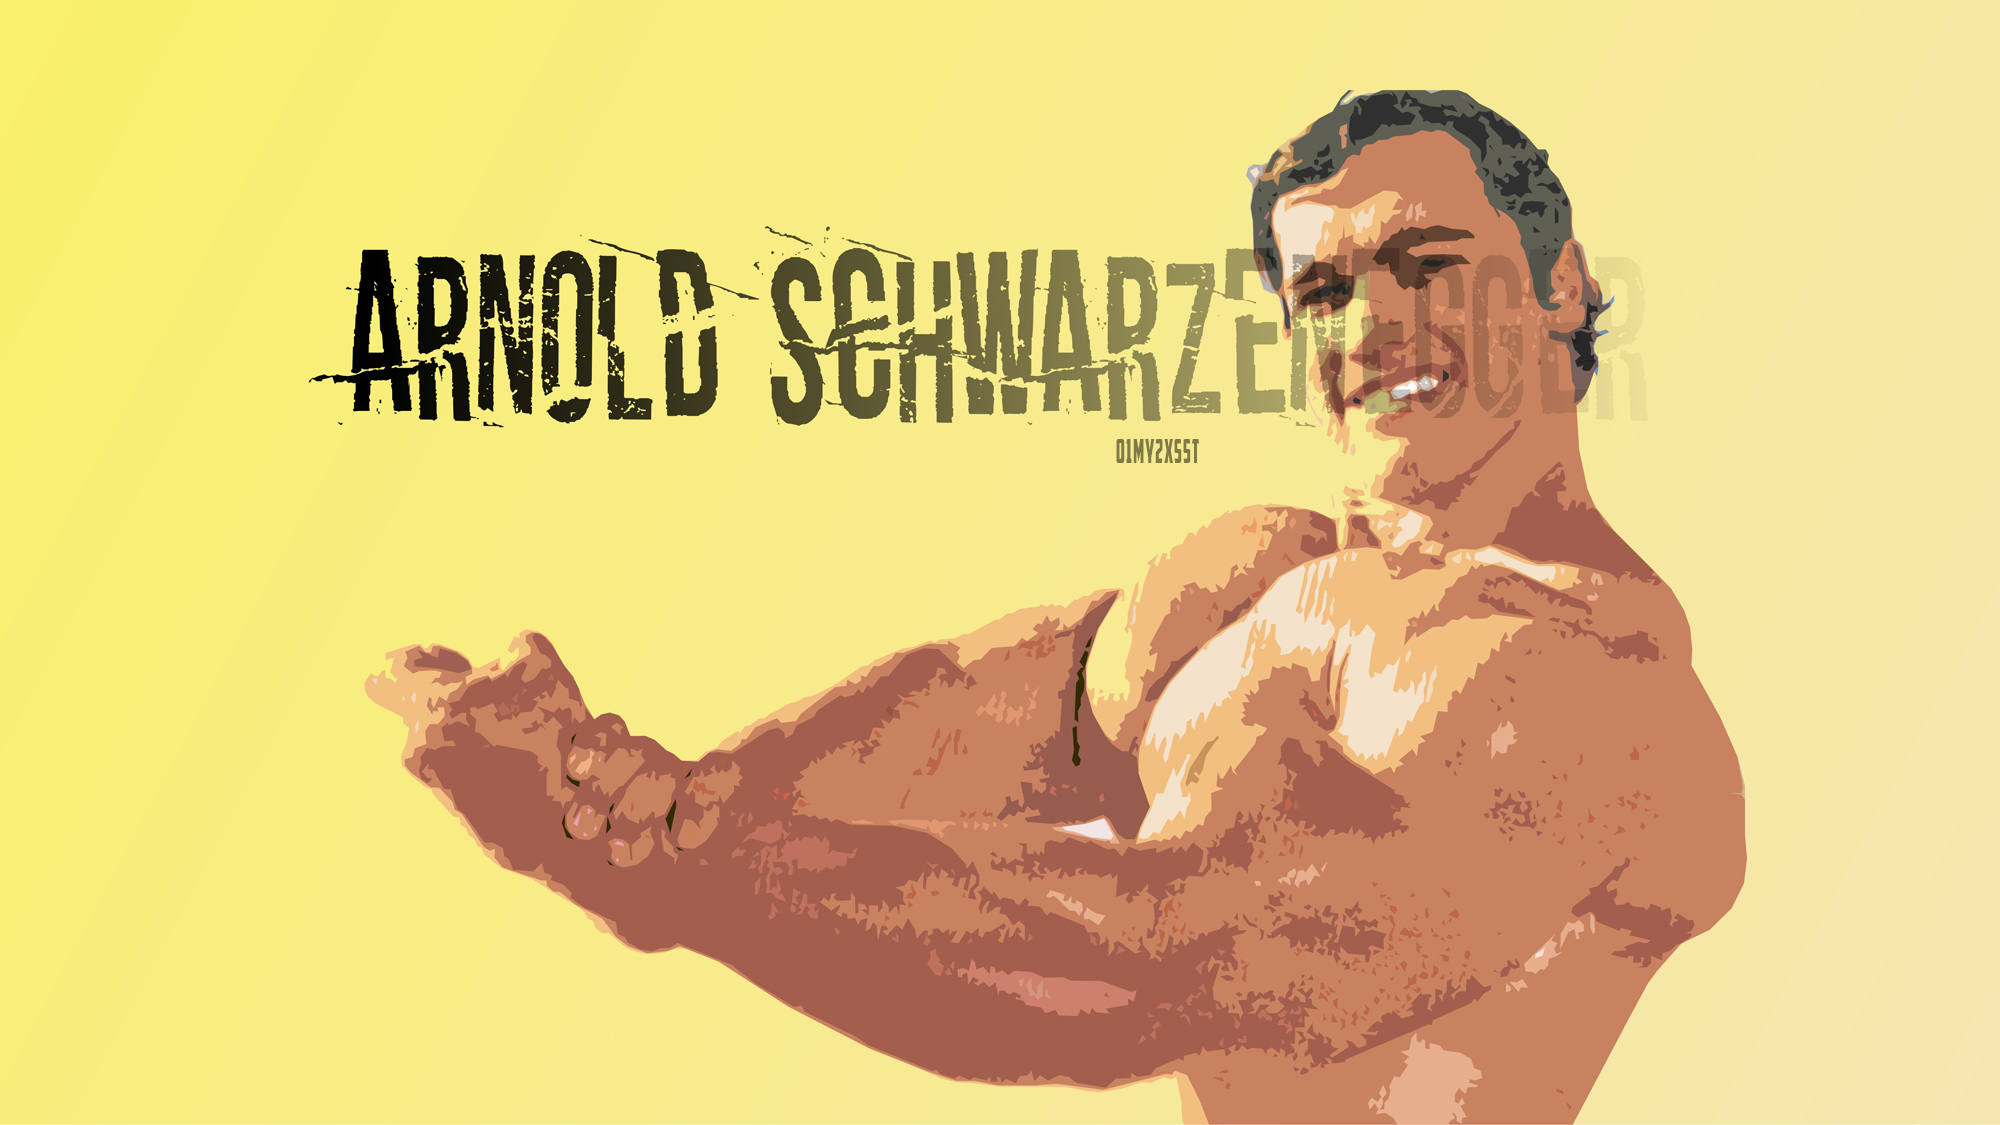 arnold schwarzenegger, celebrity, actor, bodybuilding, muscle, portrait, retro